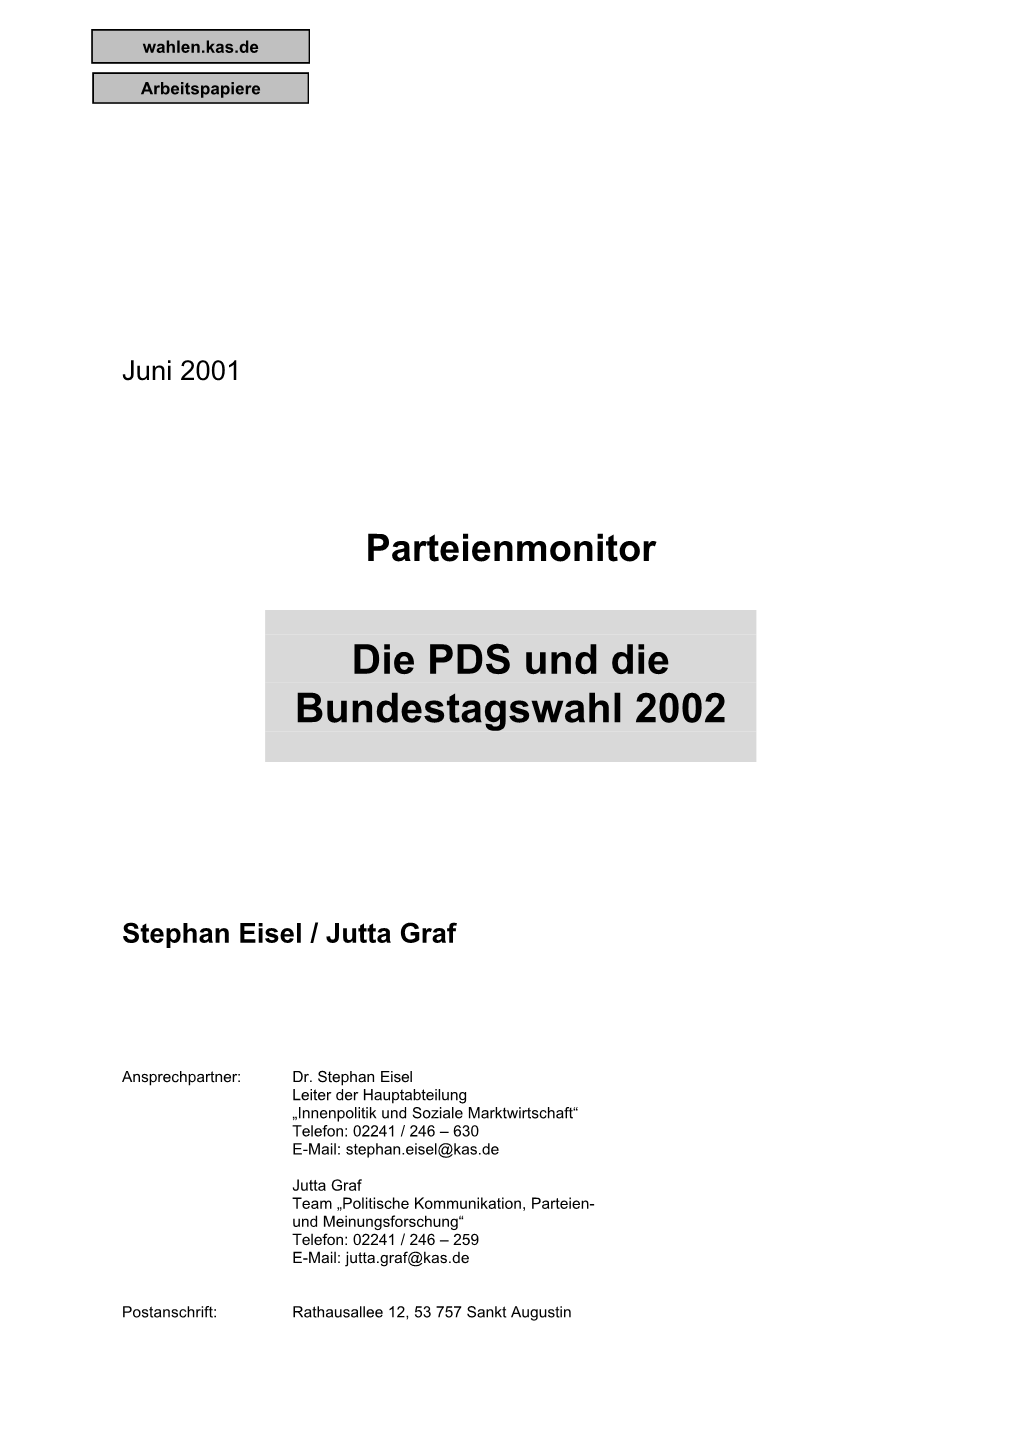 Die PDS Und Die Bundestagswahl 2002